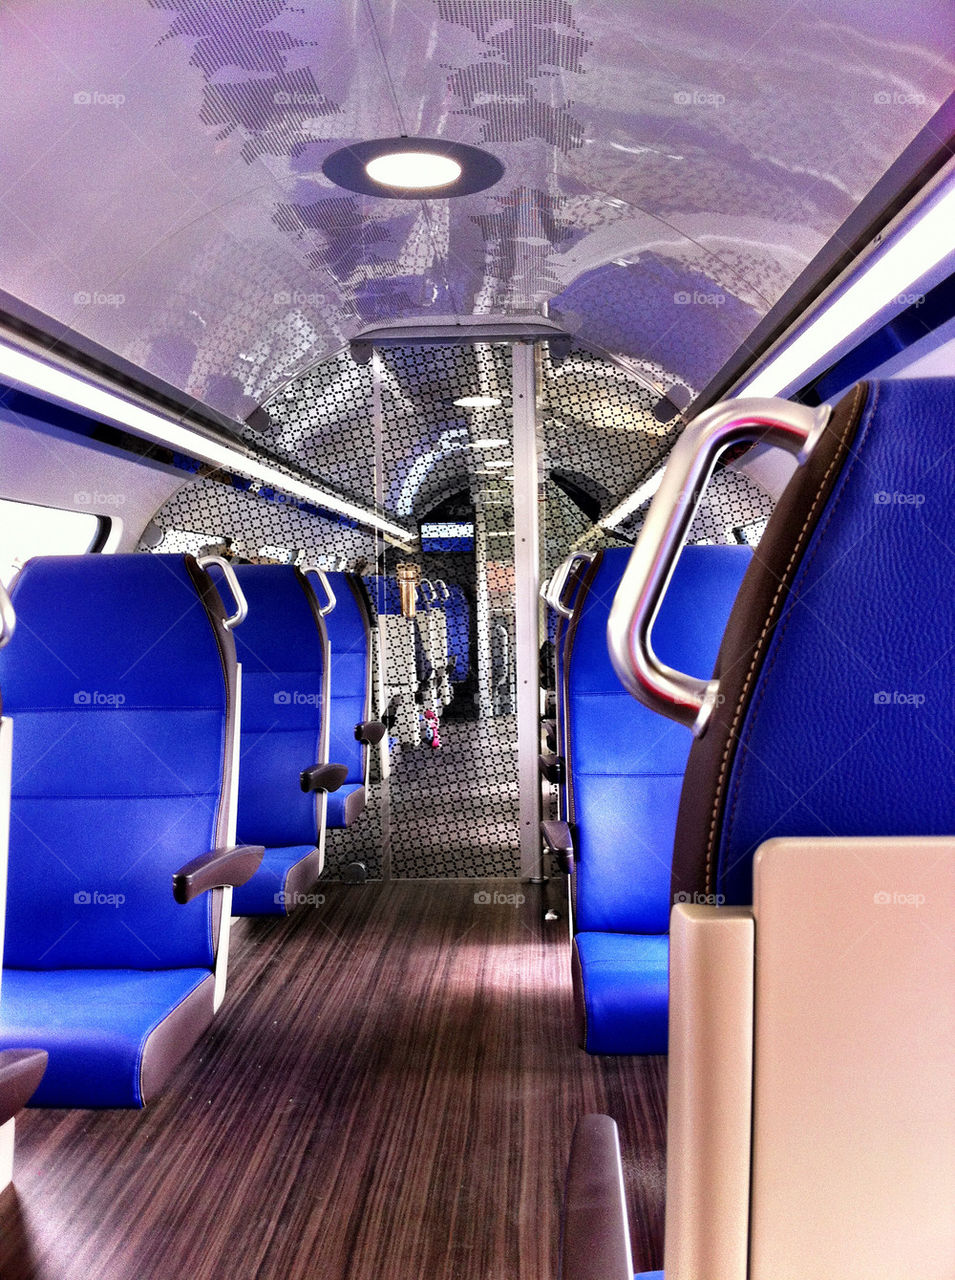 Sitting in a train